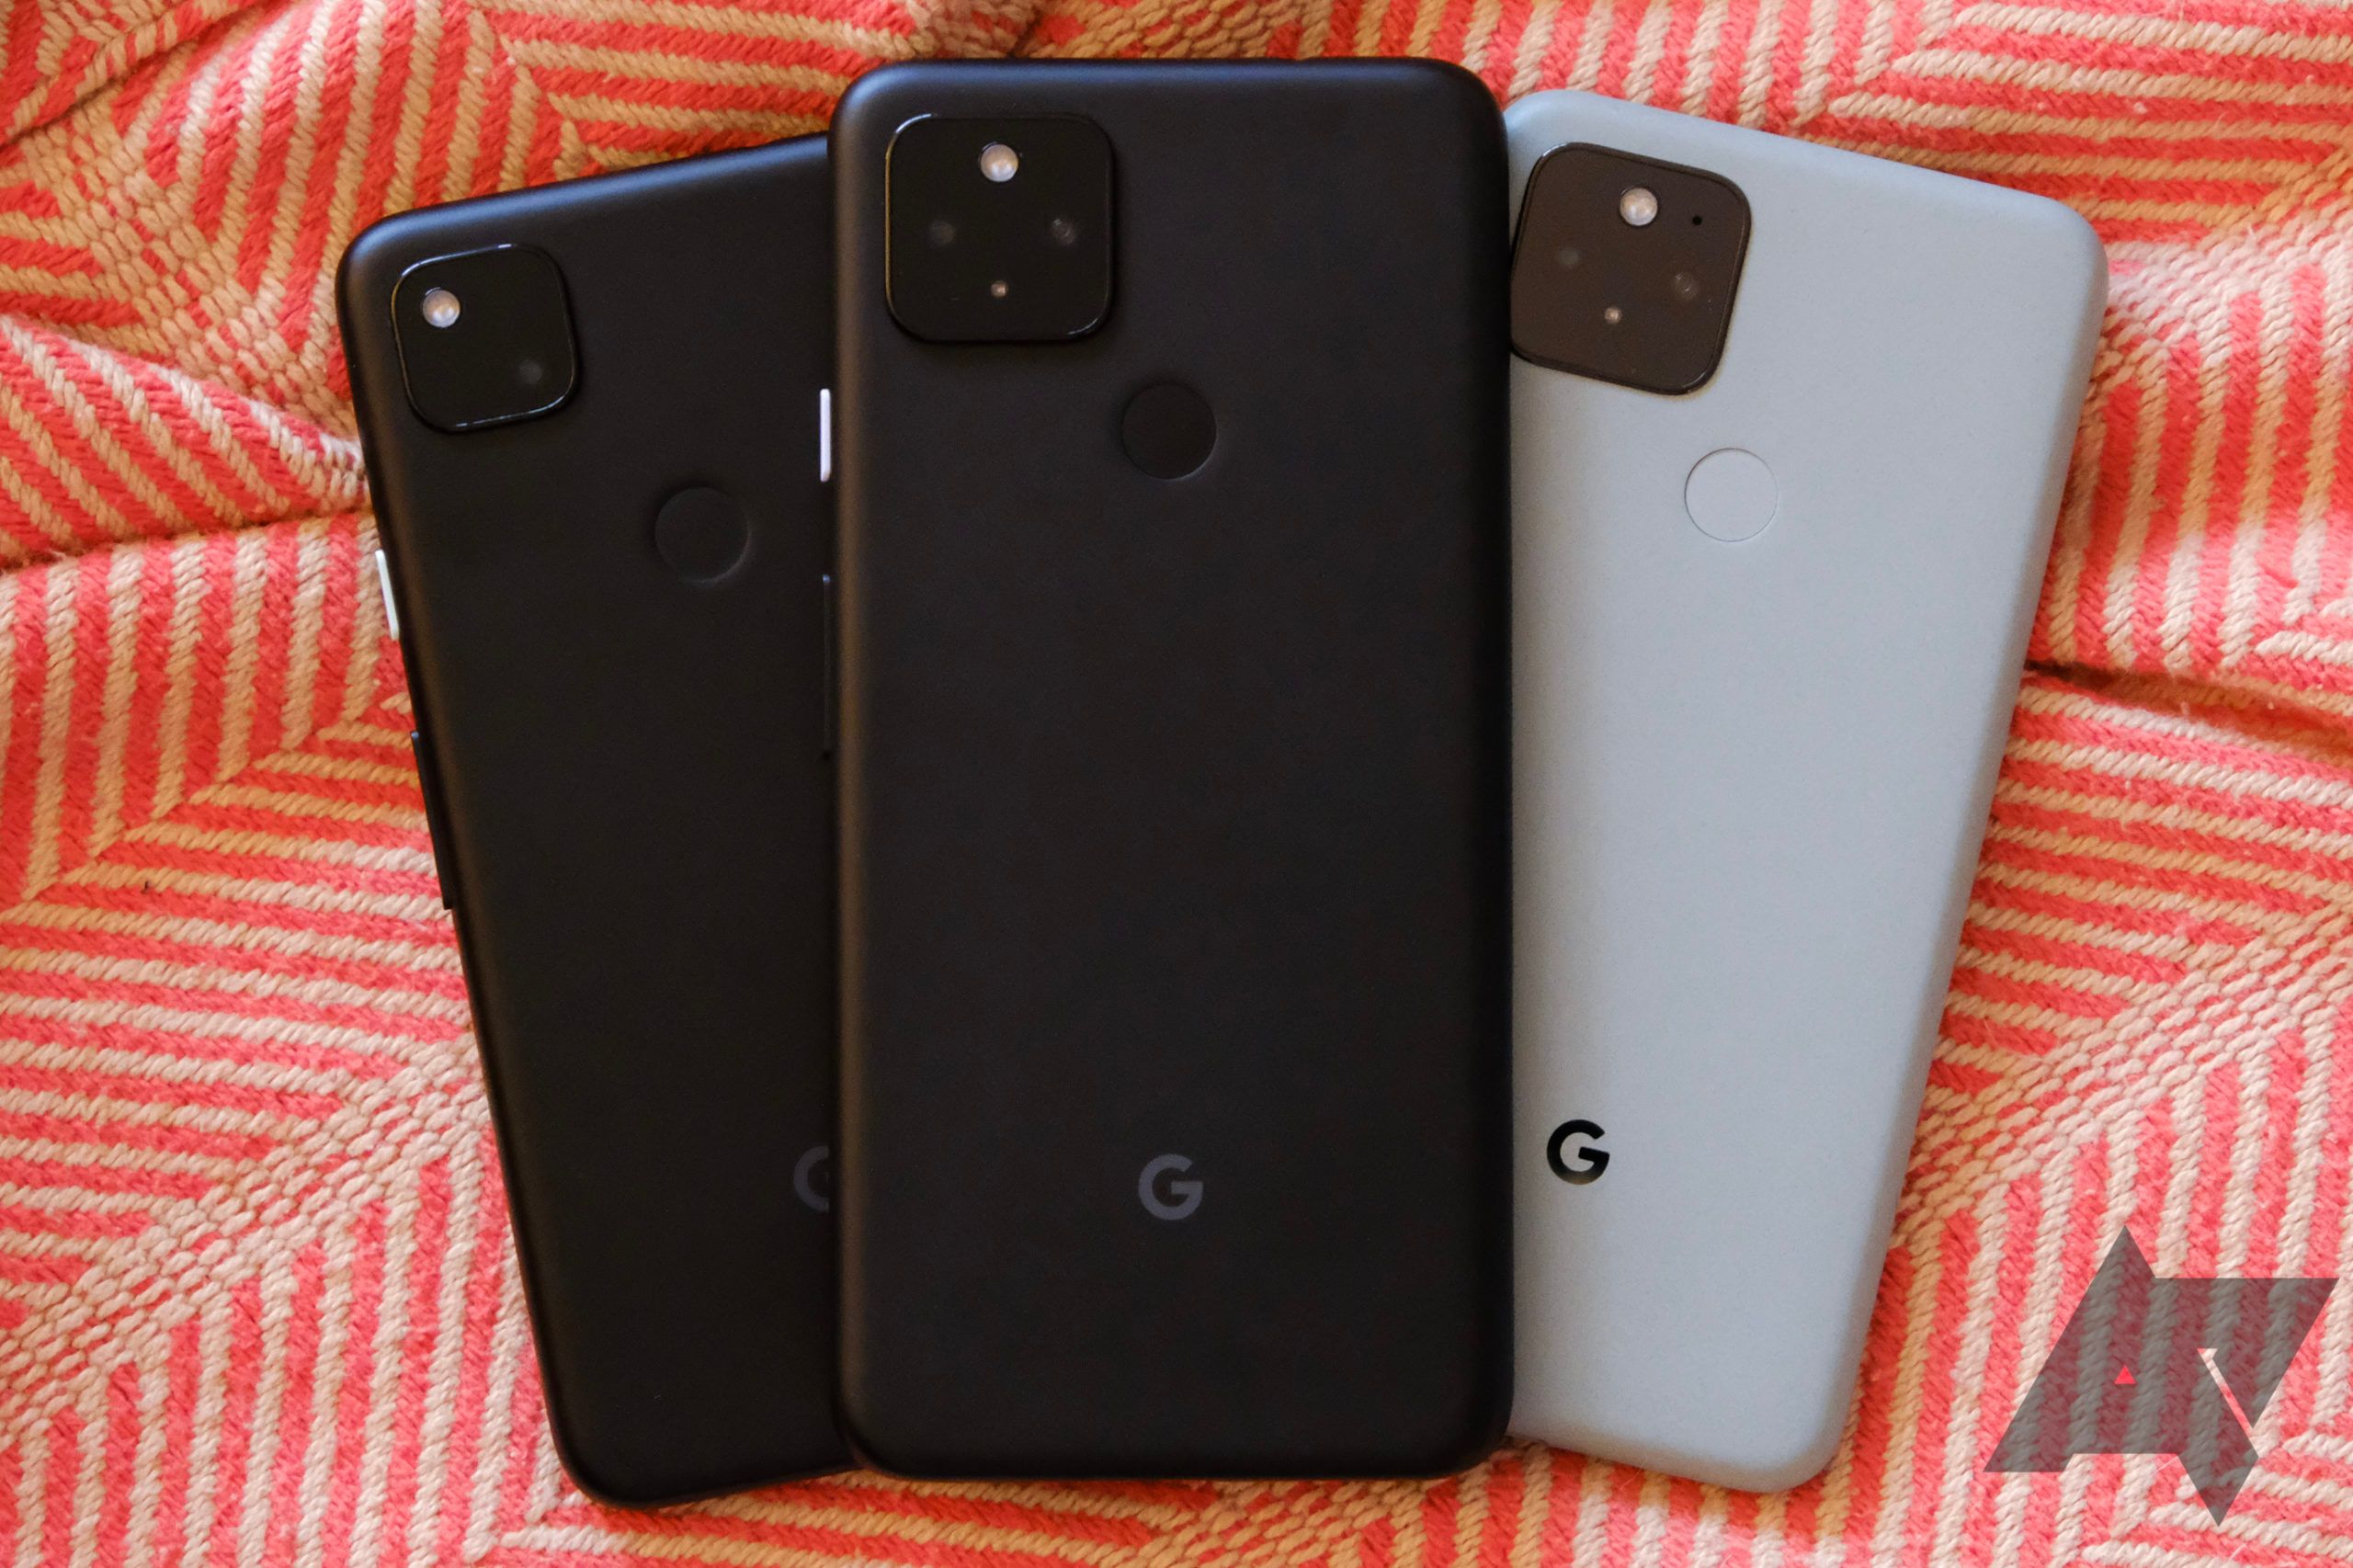 Google Pixel 4a, Pixel 4a 5G, and Pixel 5 stack